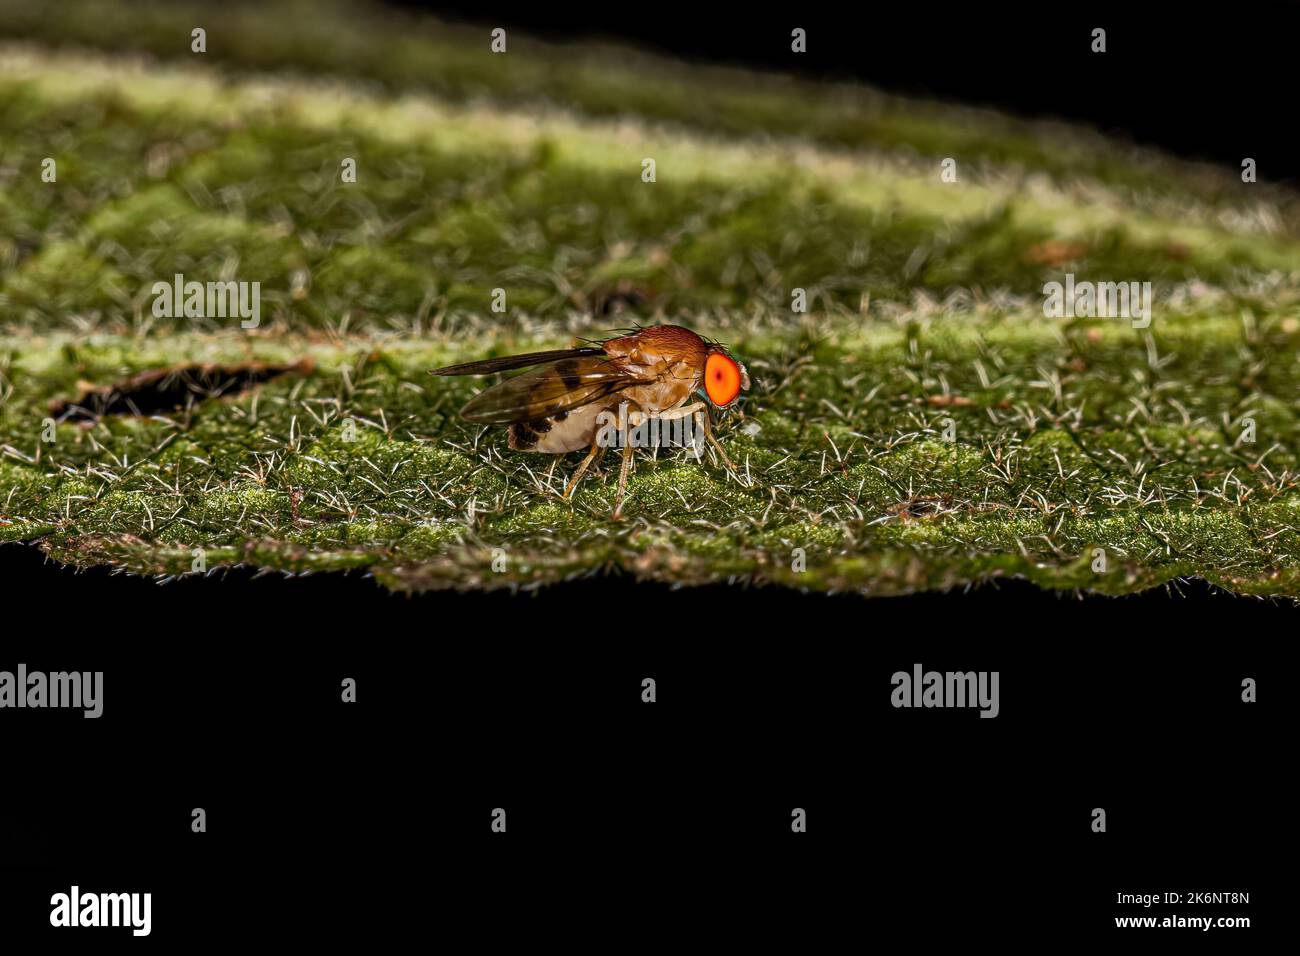 Fruit Fly adulto della famiglia Drosophilidae Foto Stock